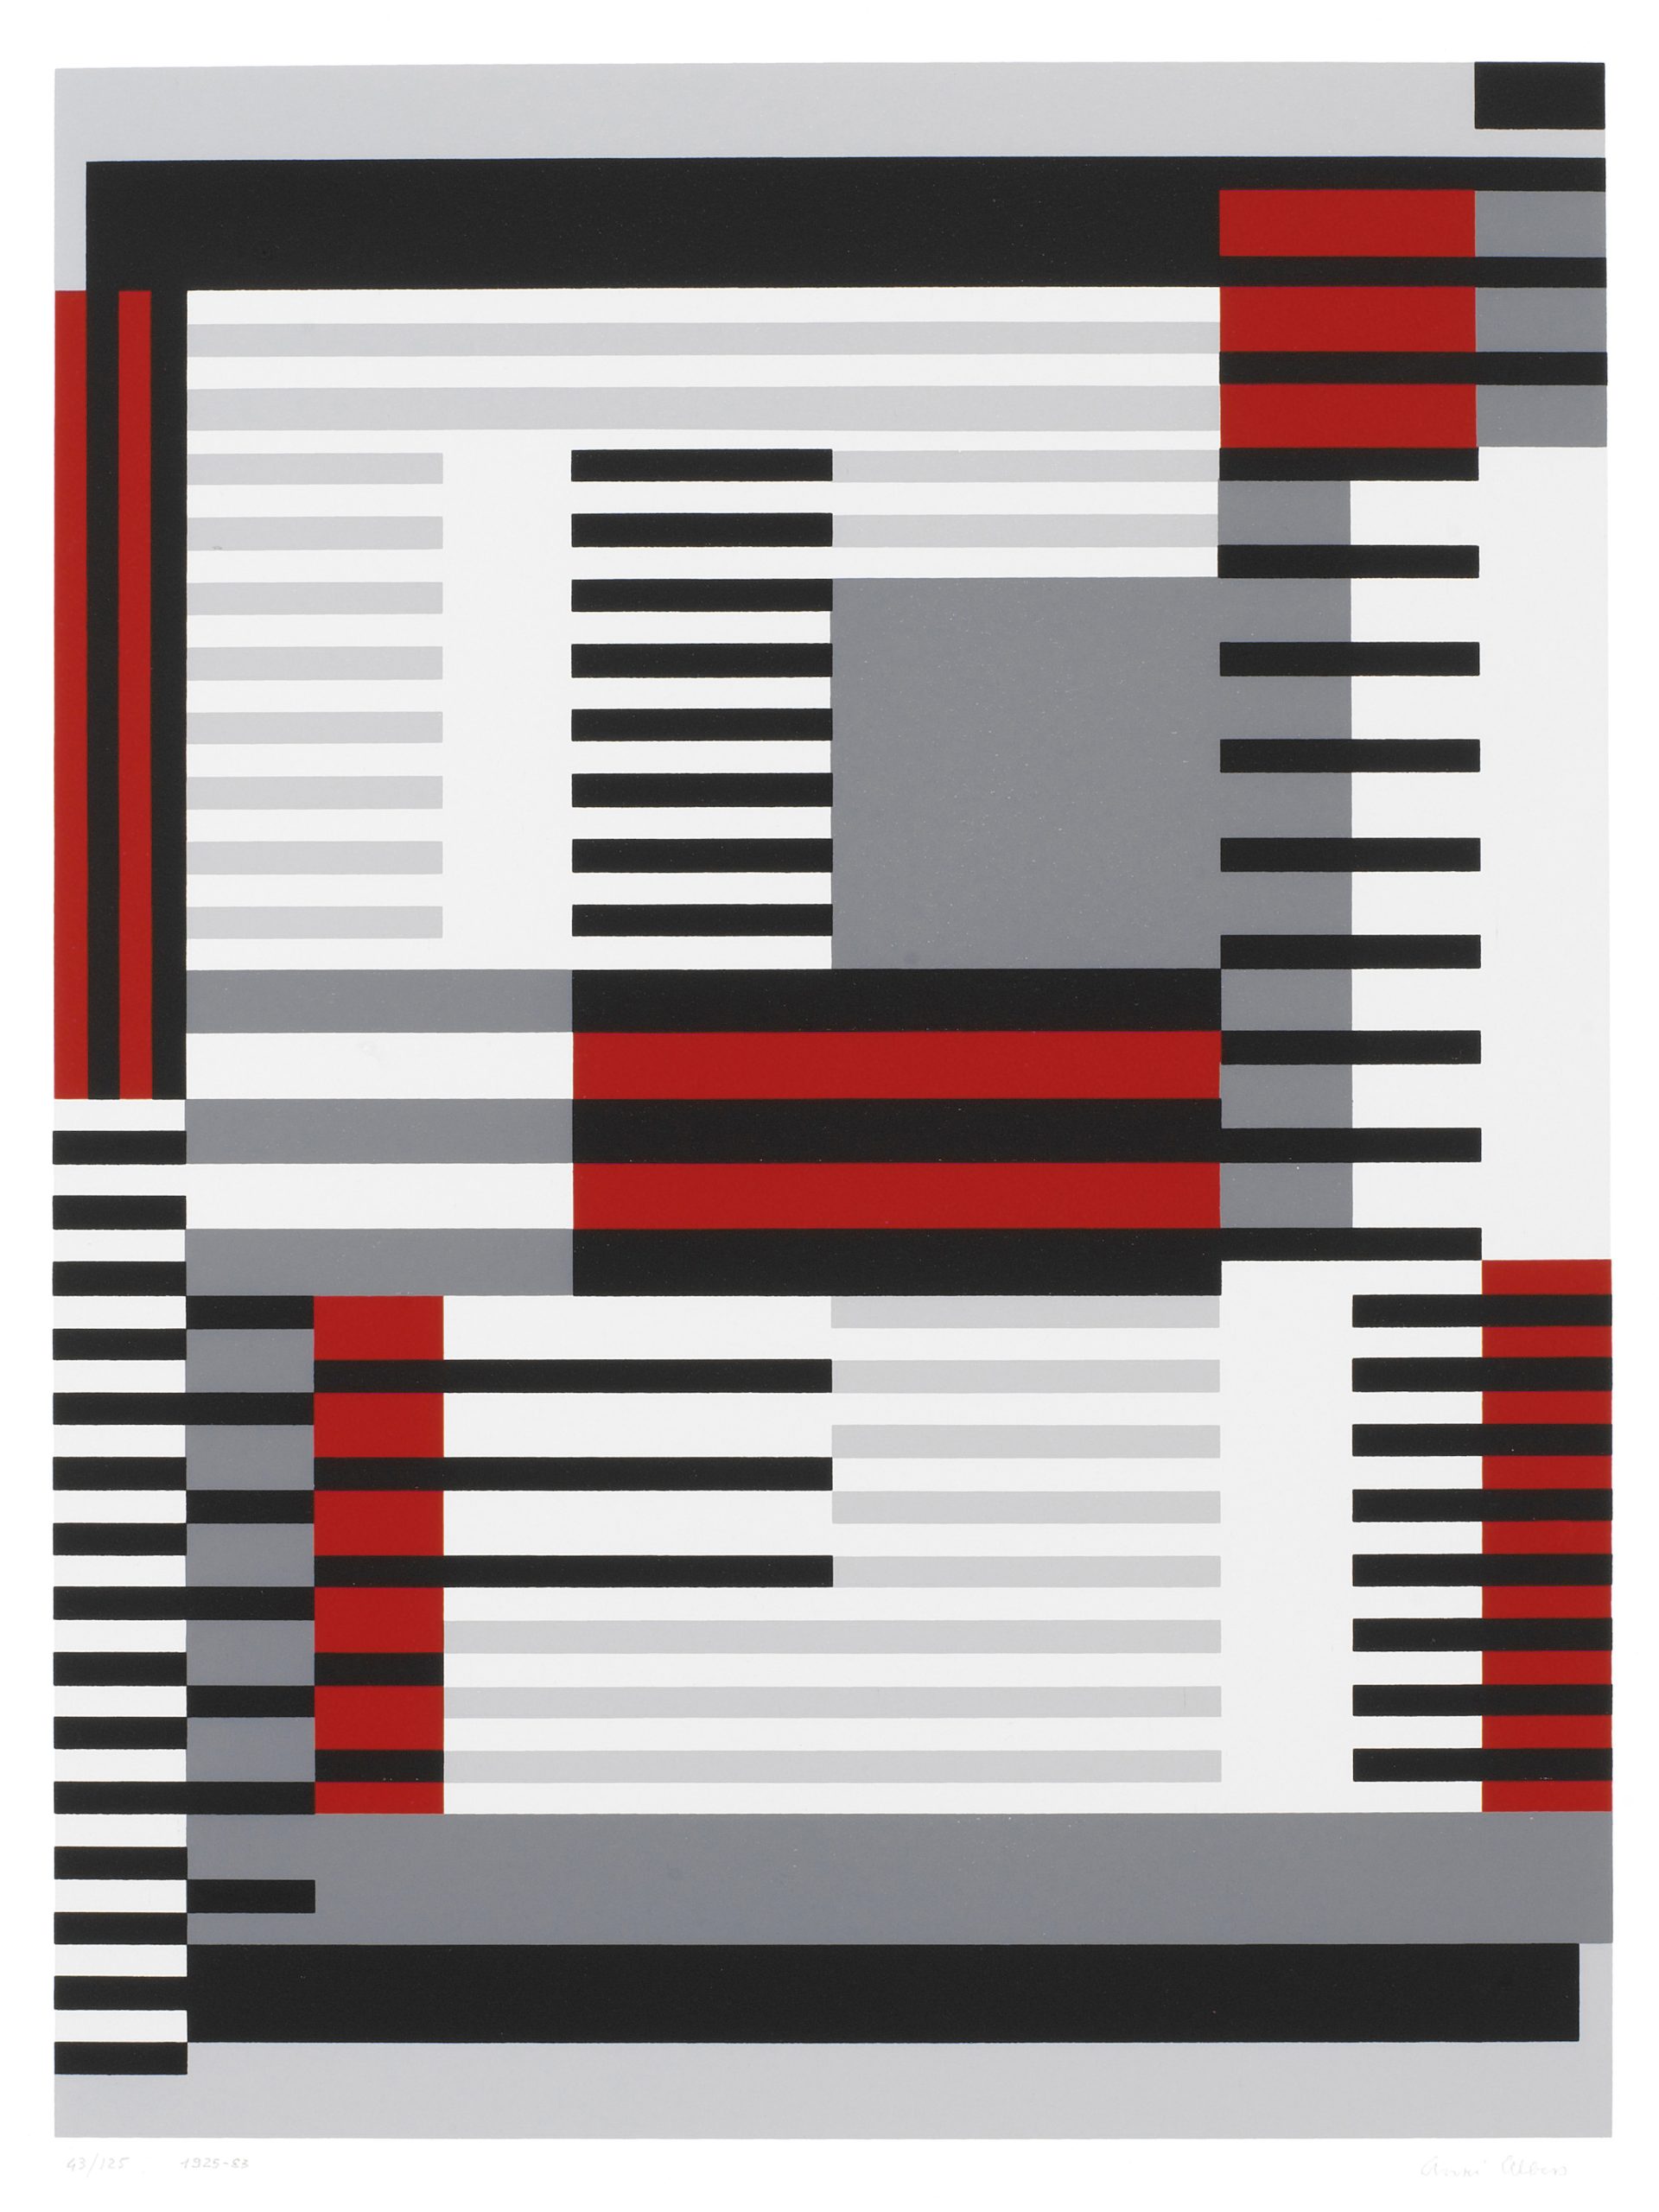 A red, white, gray, and black striped design